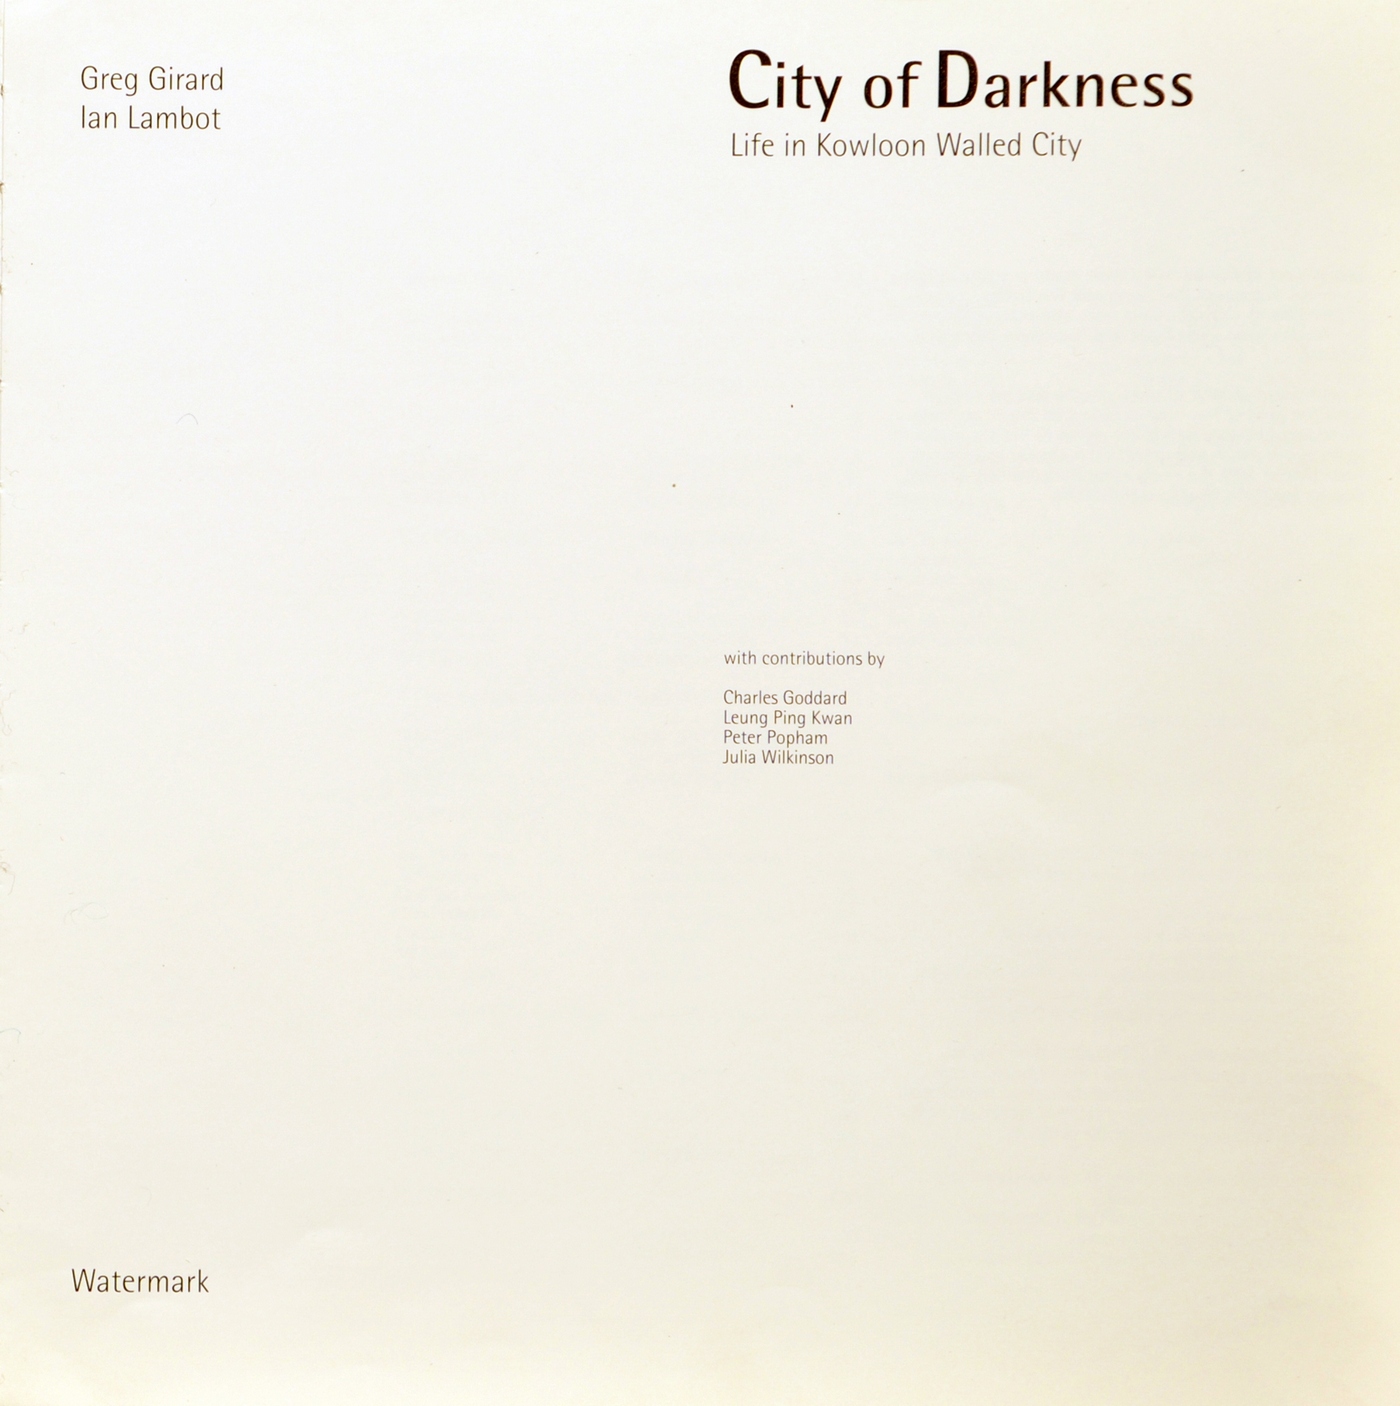 City of Darkness : Life in Kowloon Walled City / by Greg Girard and Ian Lambot. — Hong Kong : Watermark Publications (UK) Limited, 1993. — 216 p., ill.